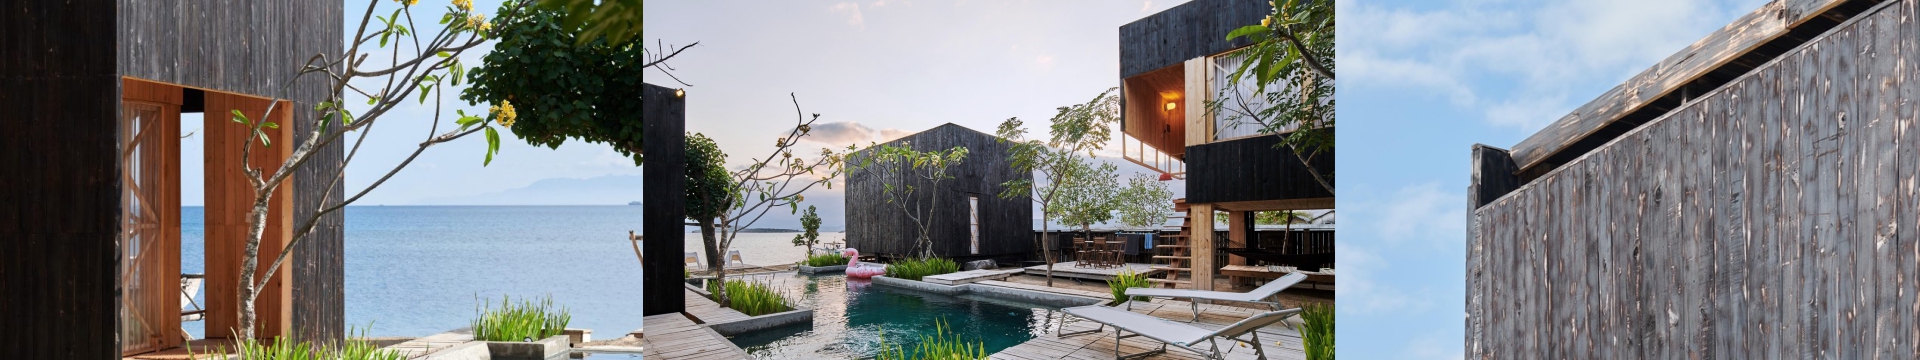 Kiyakabin, Resort Pinggir Pantai Lombok Karya Arsitek Atelier Riri